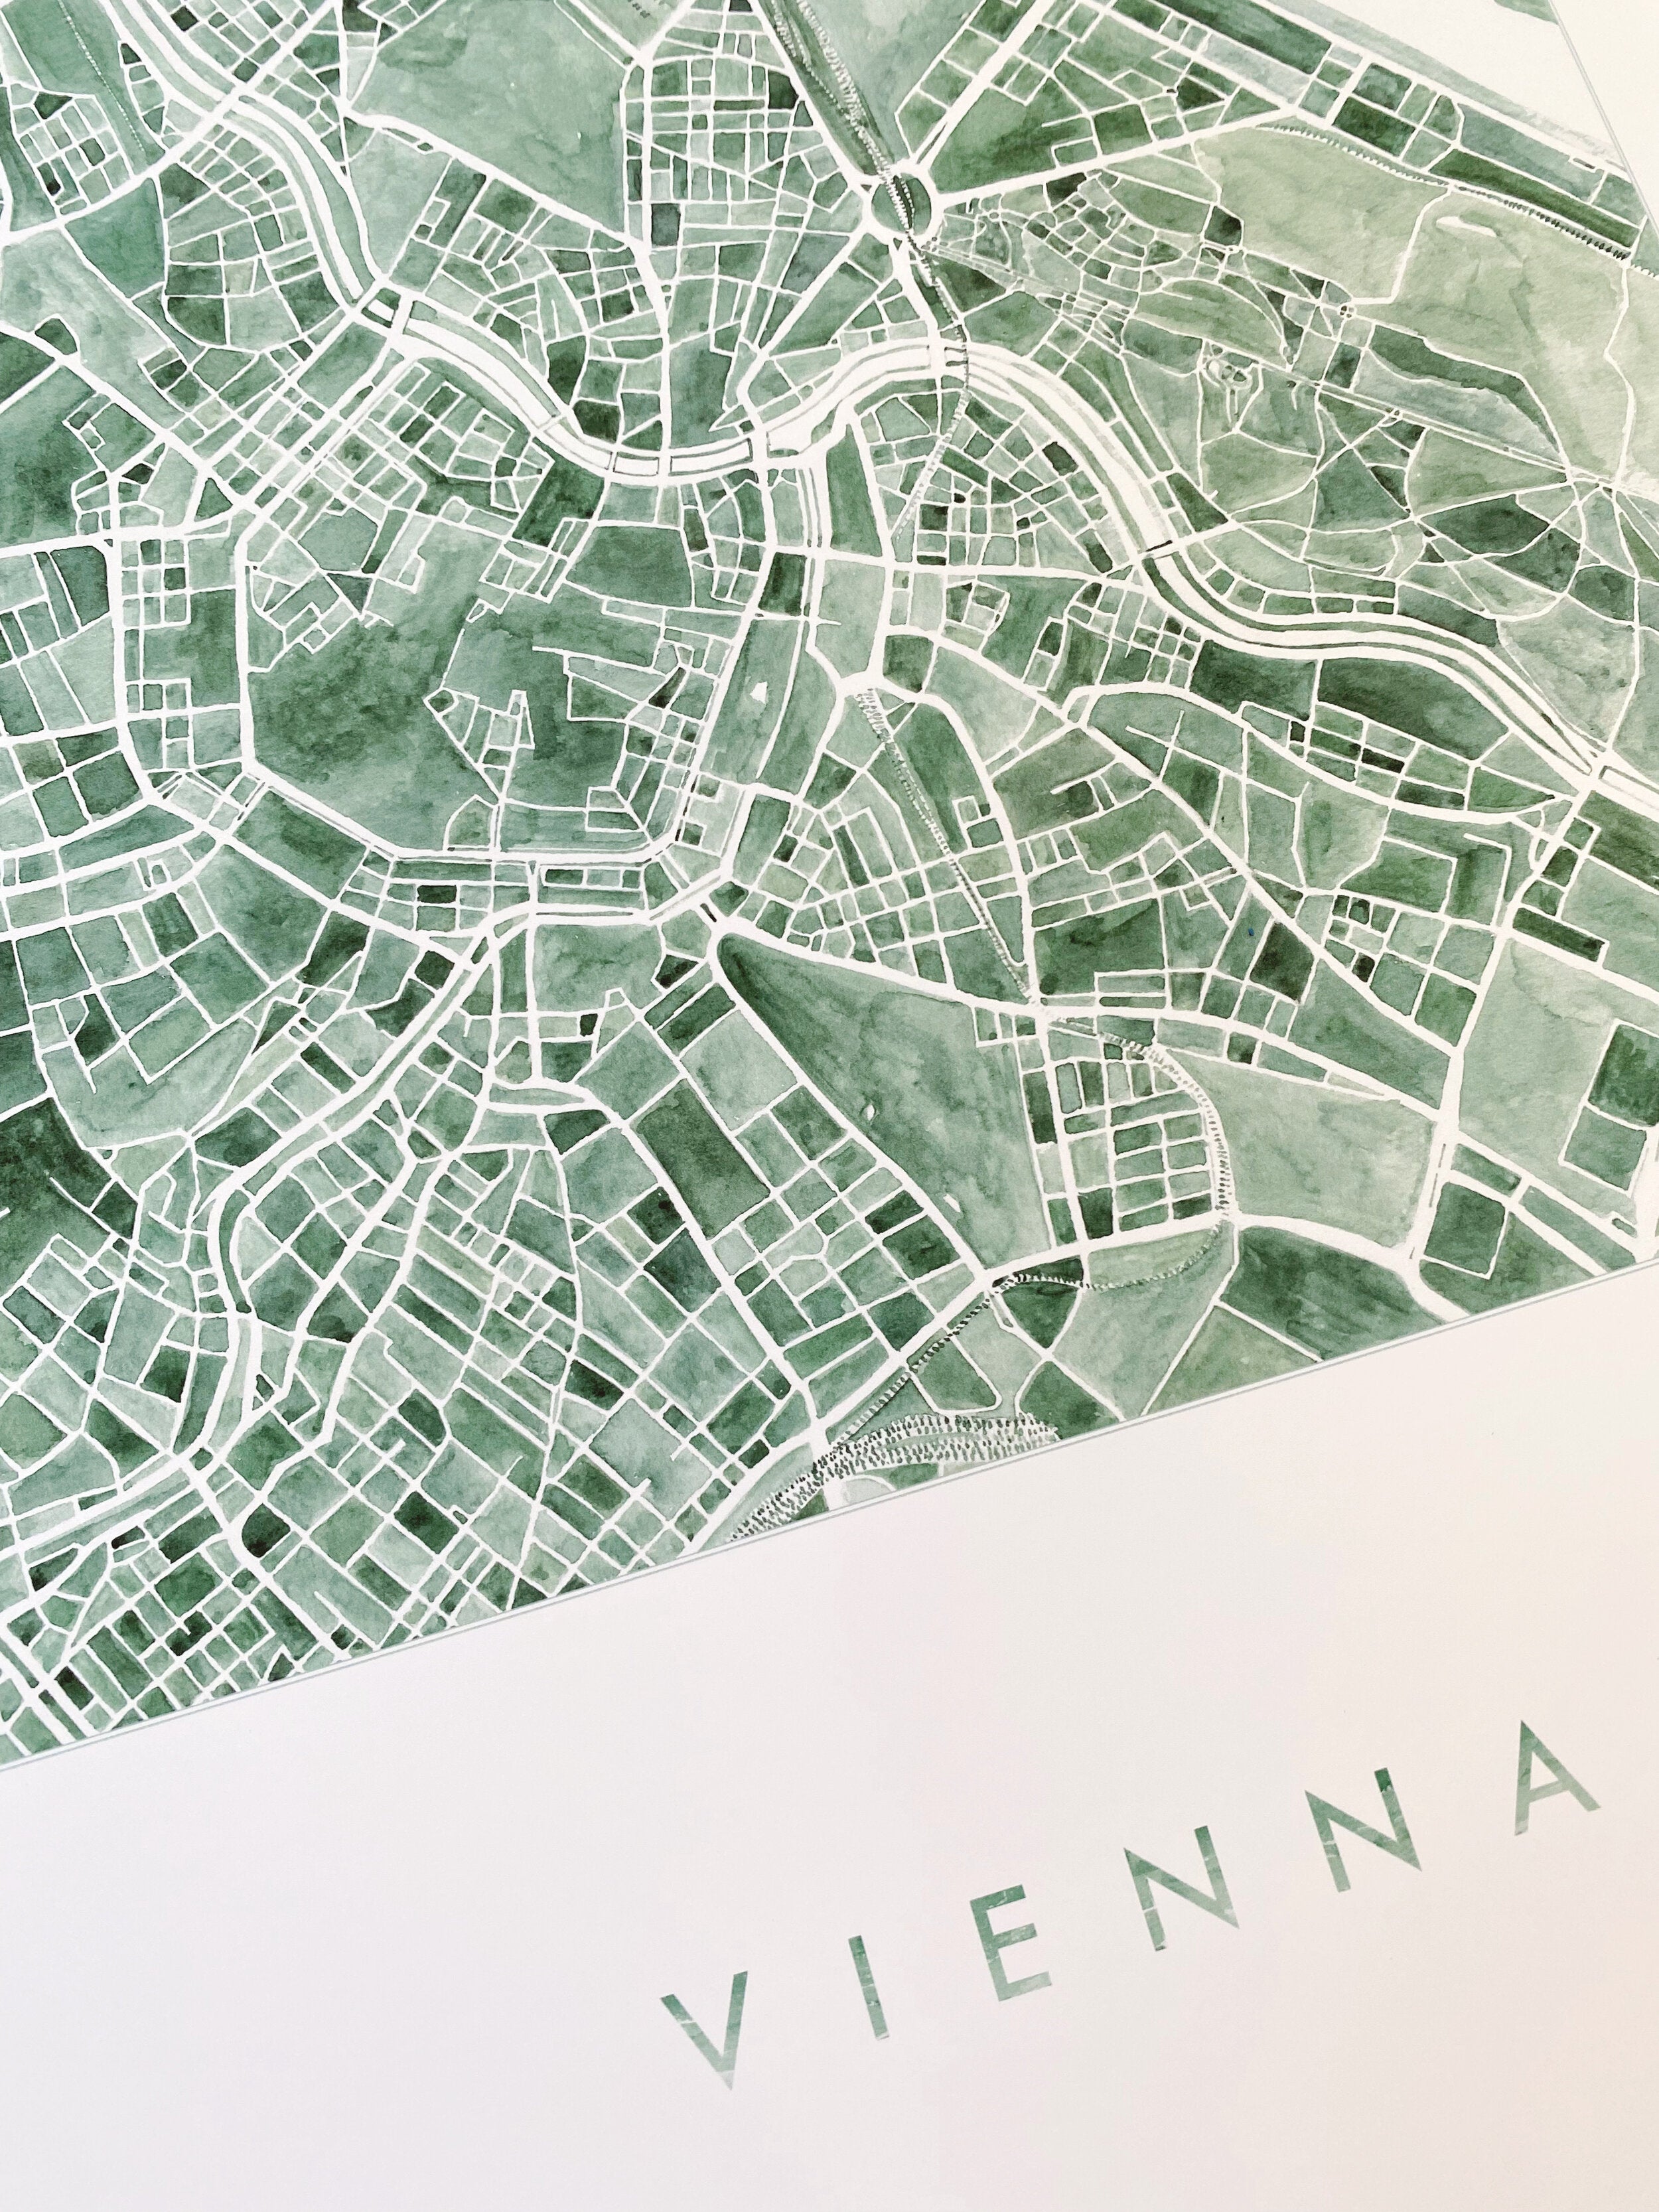 VIENNA Watercolor City Blocks Map: PRINT